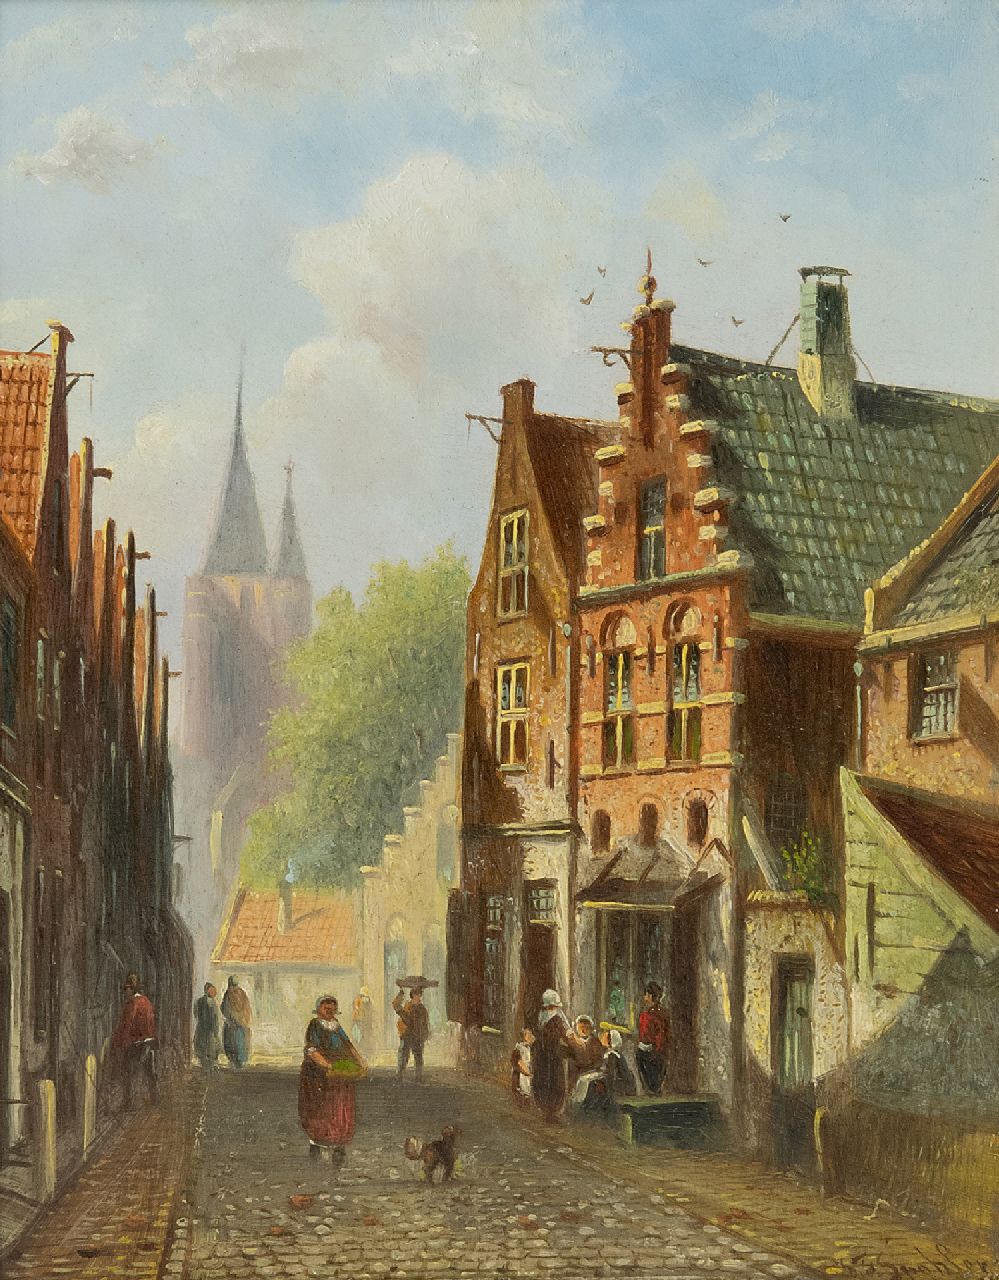 Spohler J.F.  | Johannes Franciscus Spohler, Hollands straatje, olieverf op paneel 18,9 x 14,9 cm, gesigneerd rechtsonder